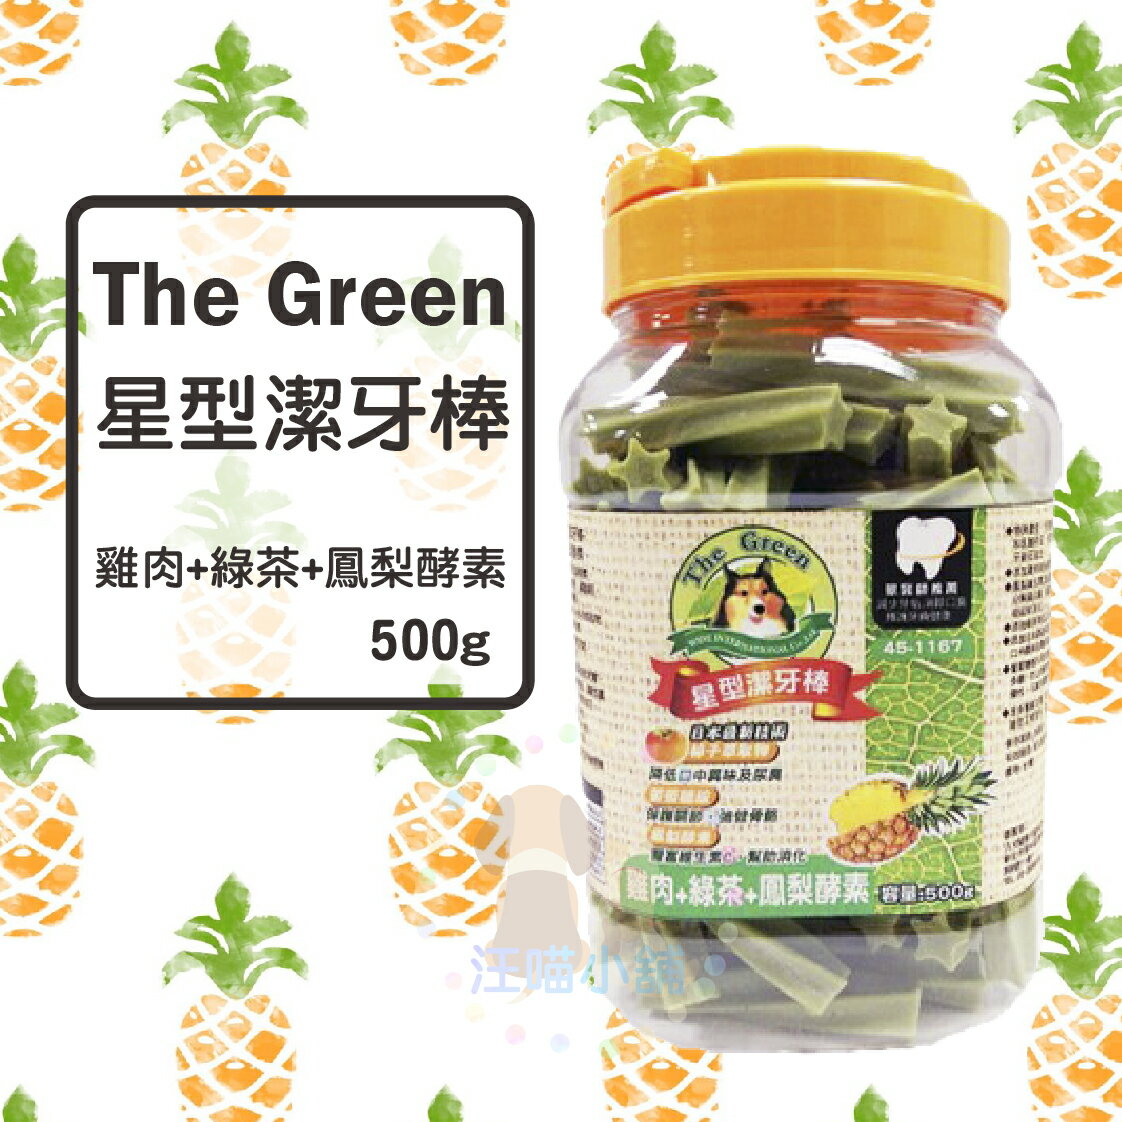 The Green星型潔牙棒【雞肉+綠茶+鳳梨酵素】500g